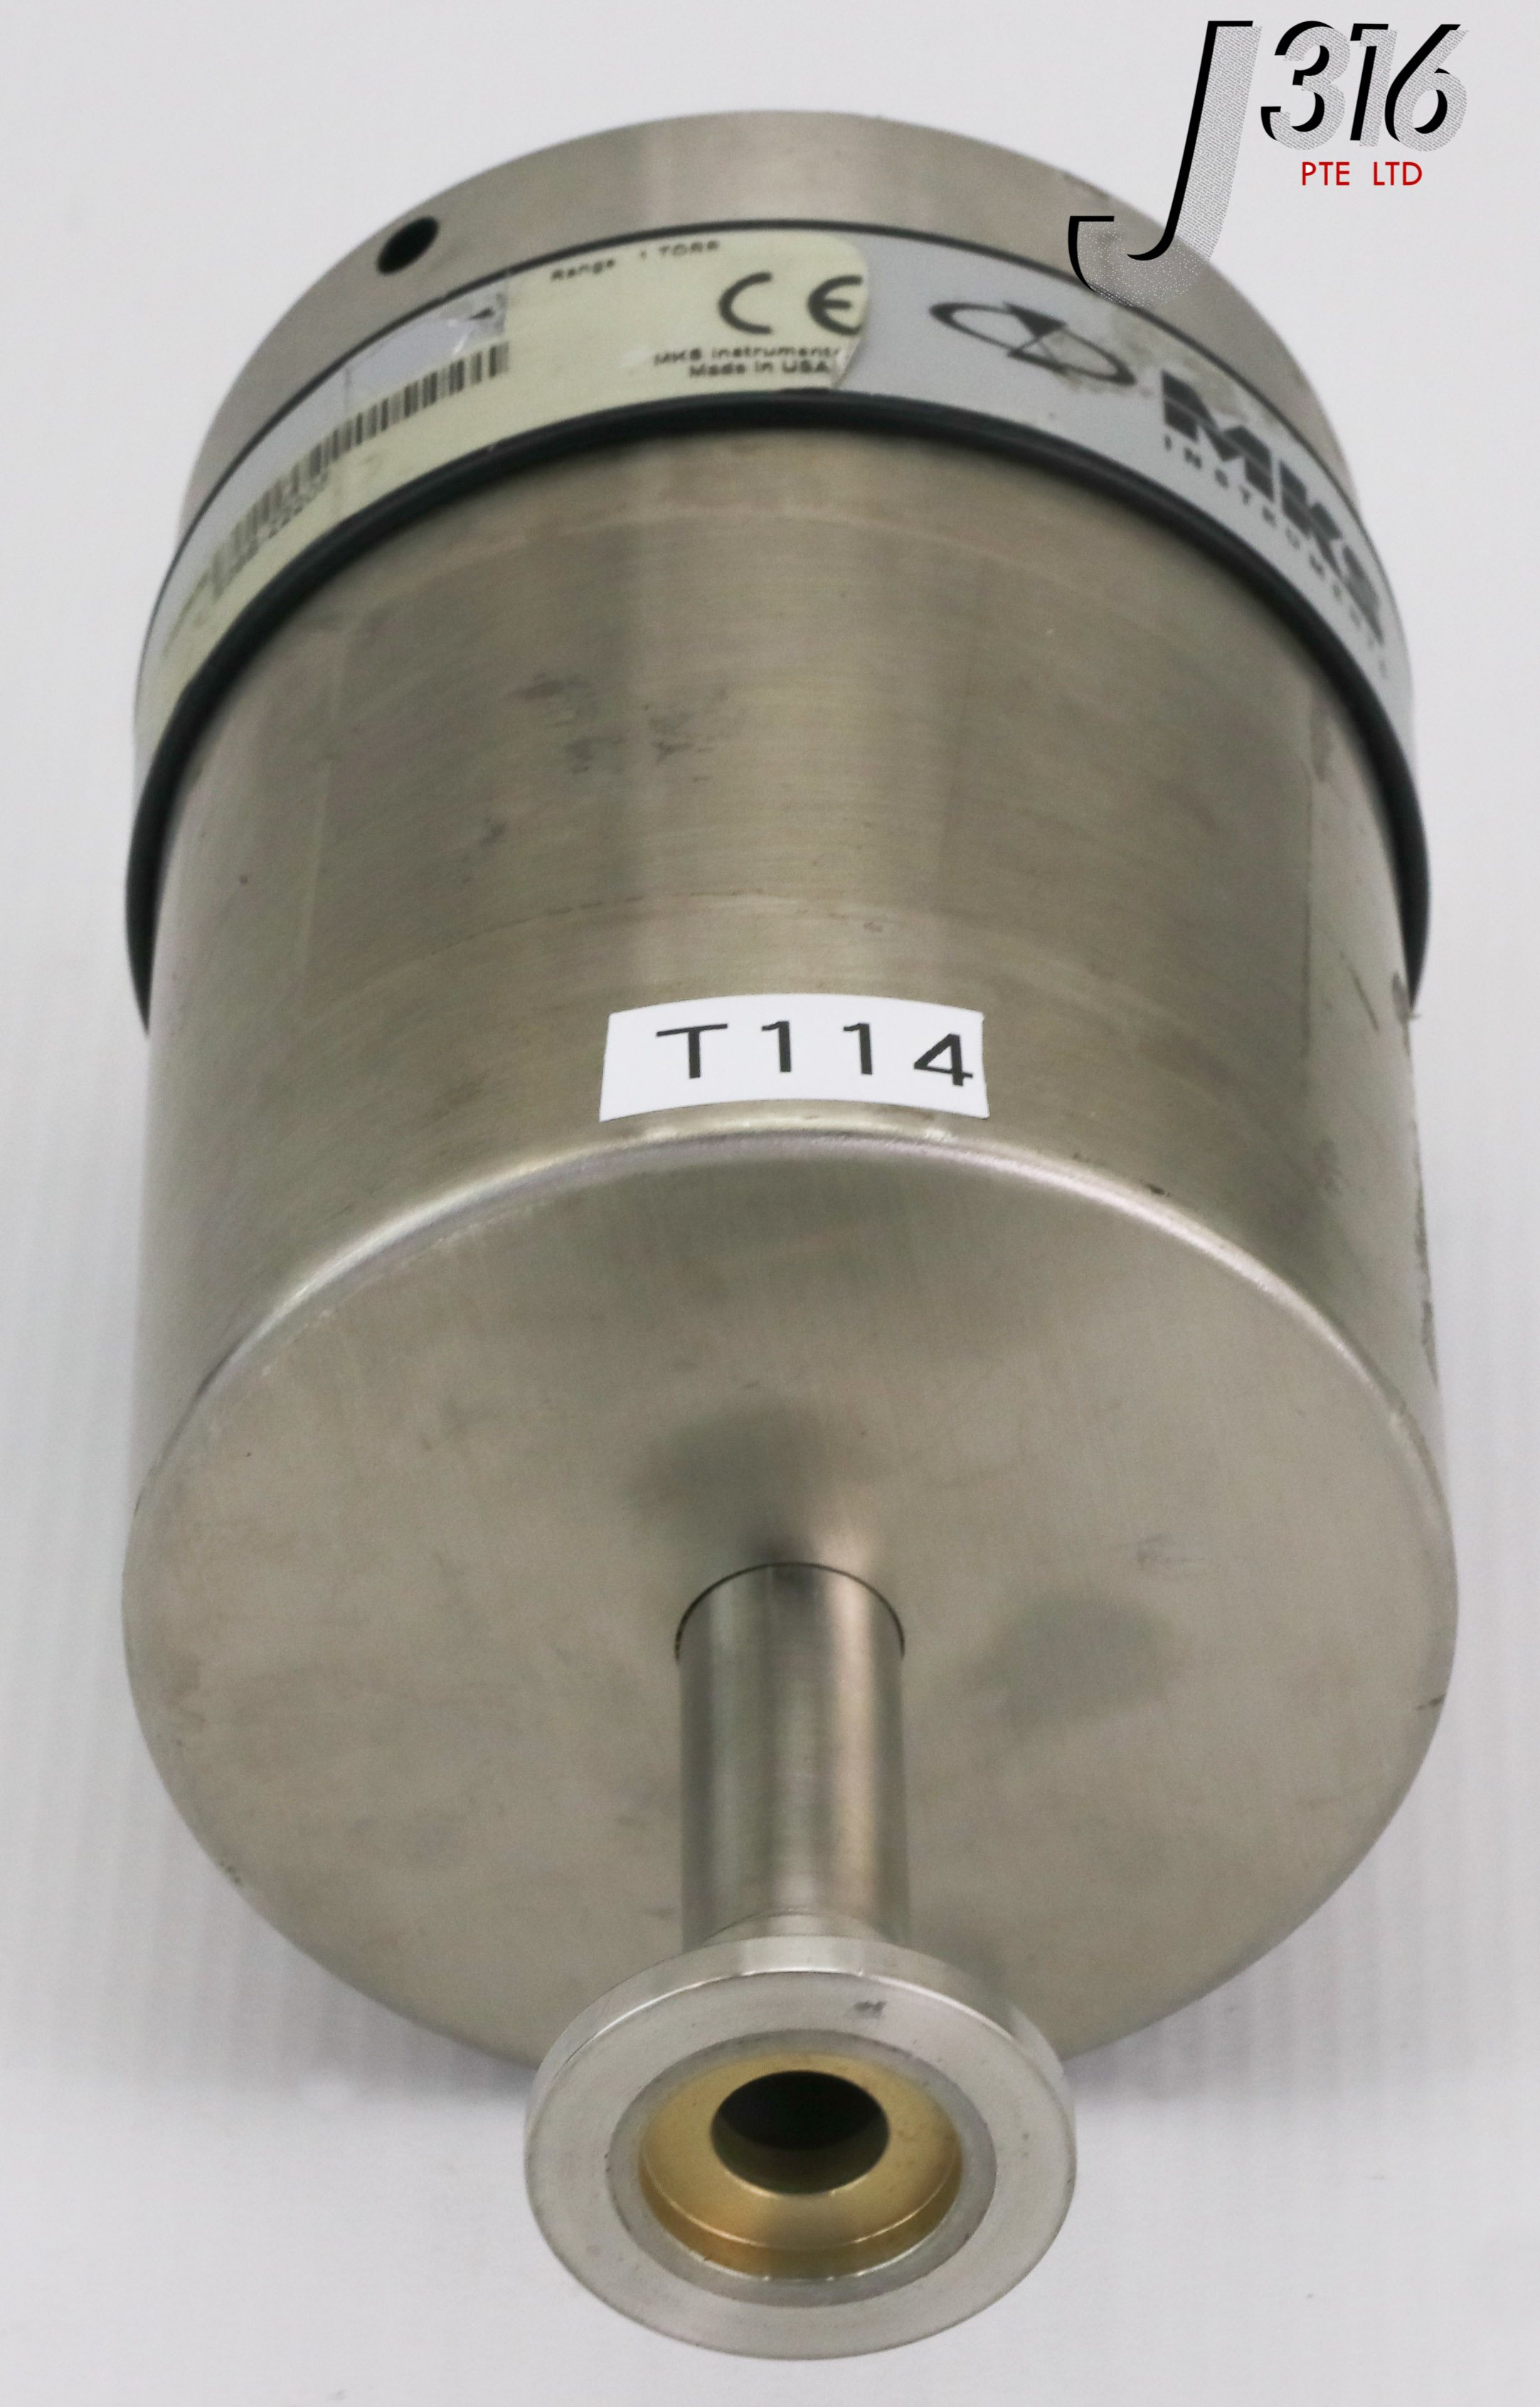 MKS Instruments 872B-29659 Baratron Pressure Transducer 500 TORR 